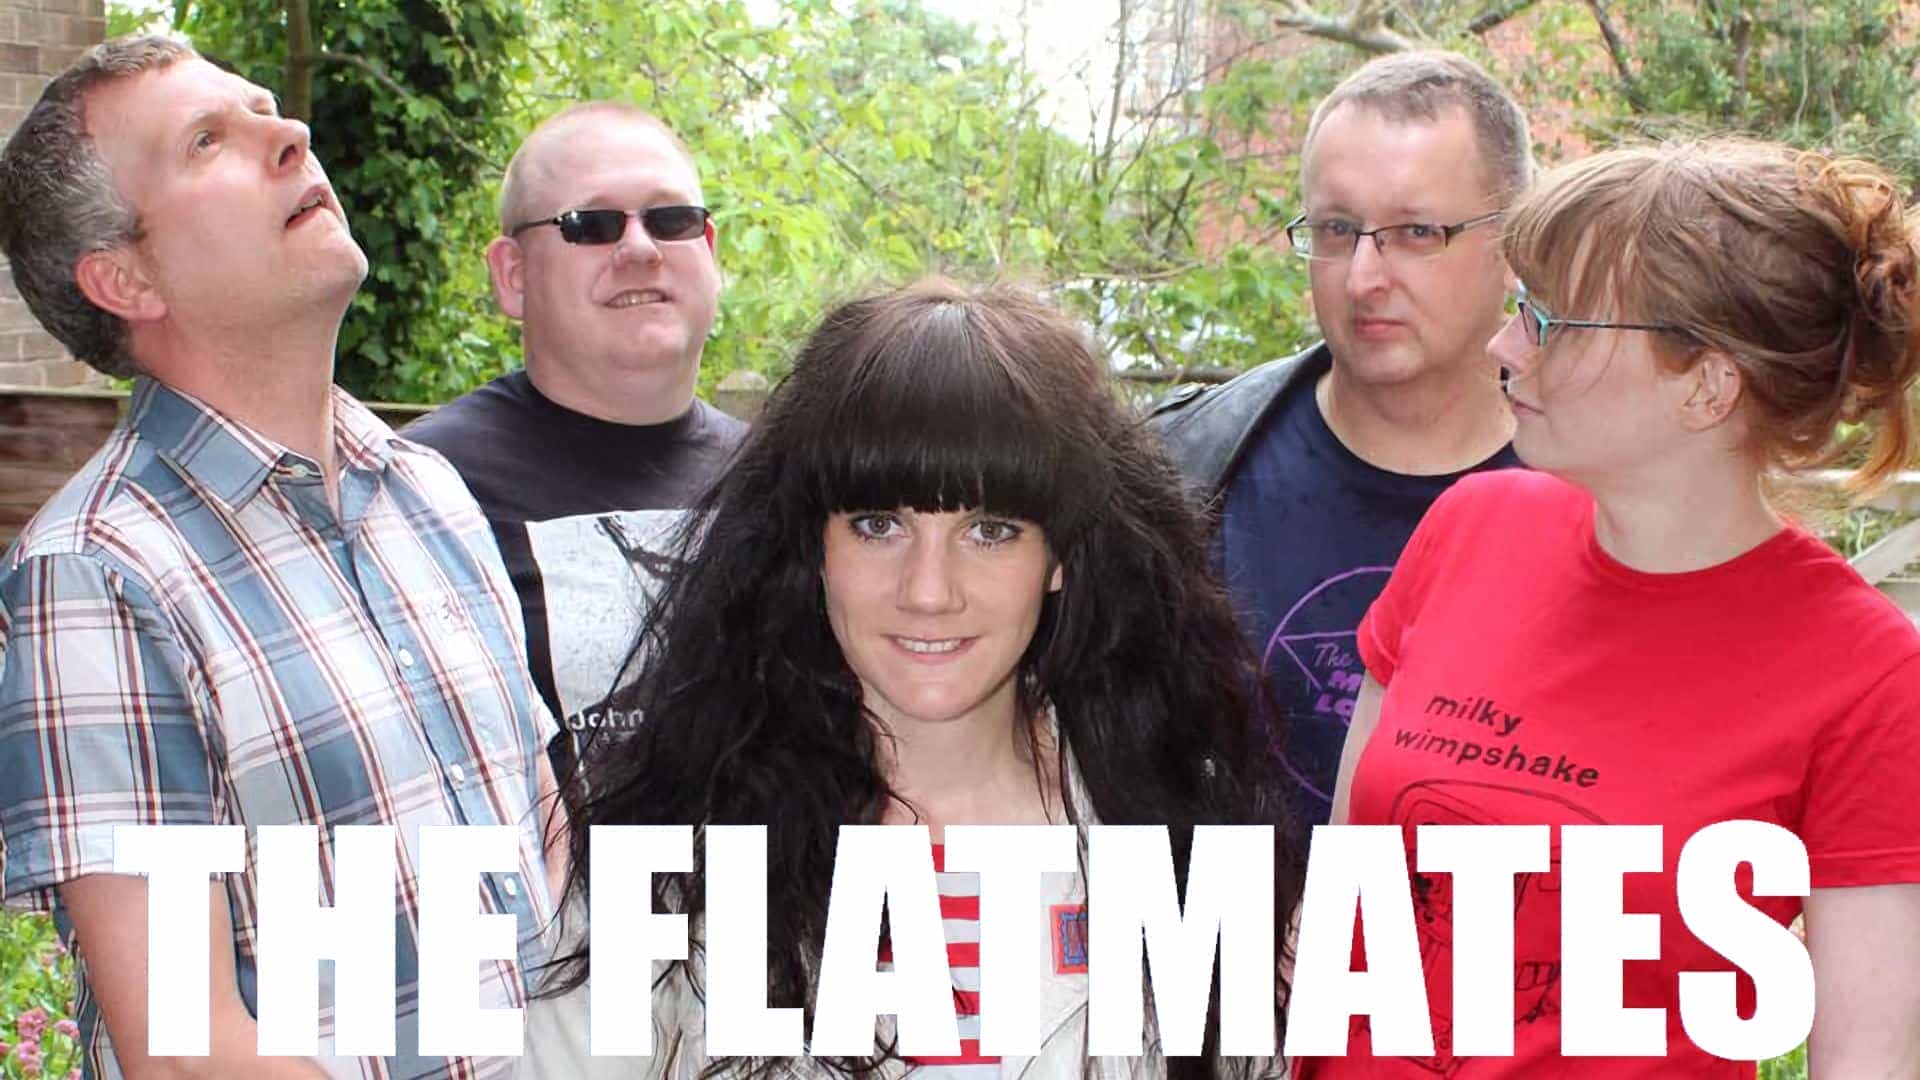 The Flatmates